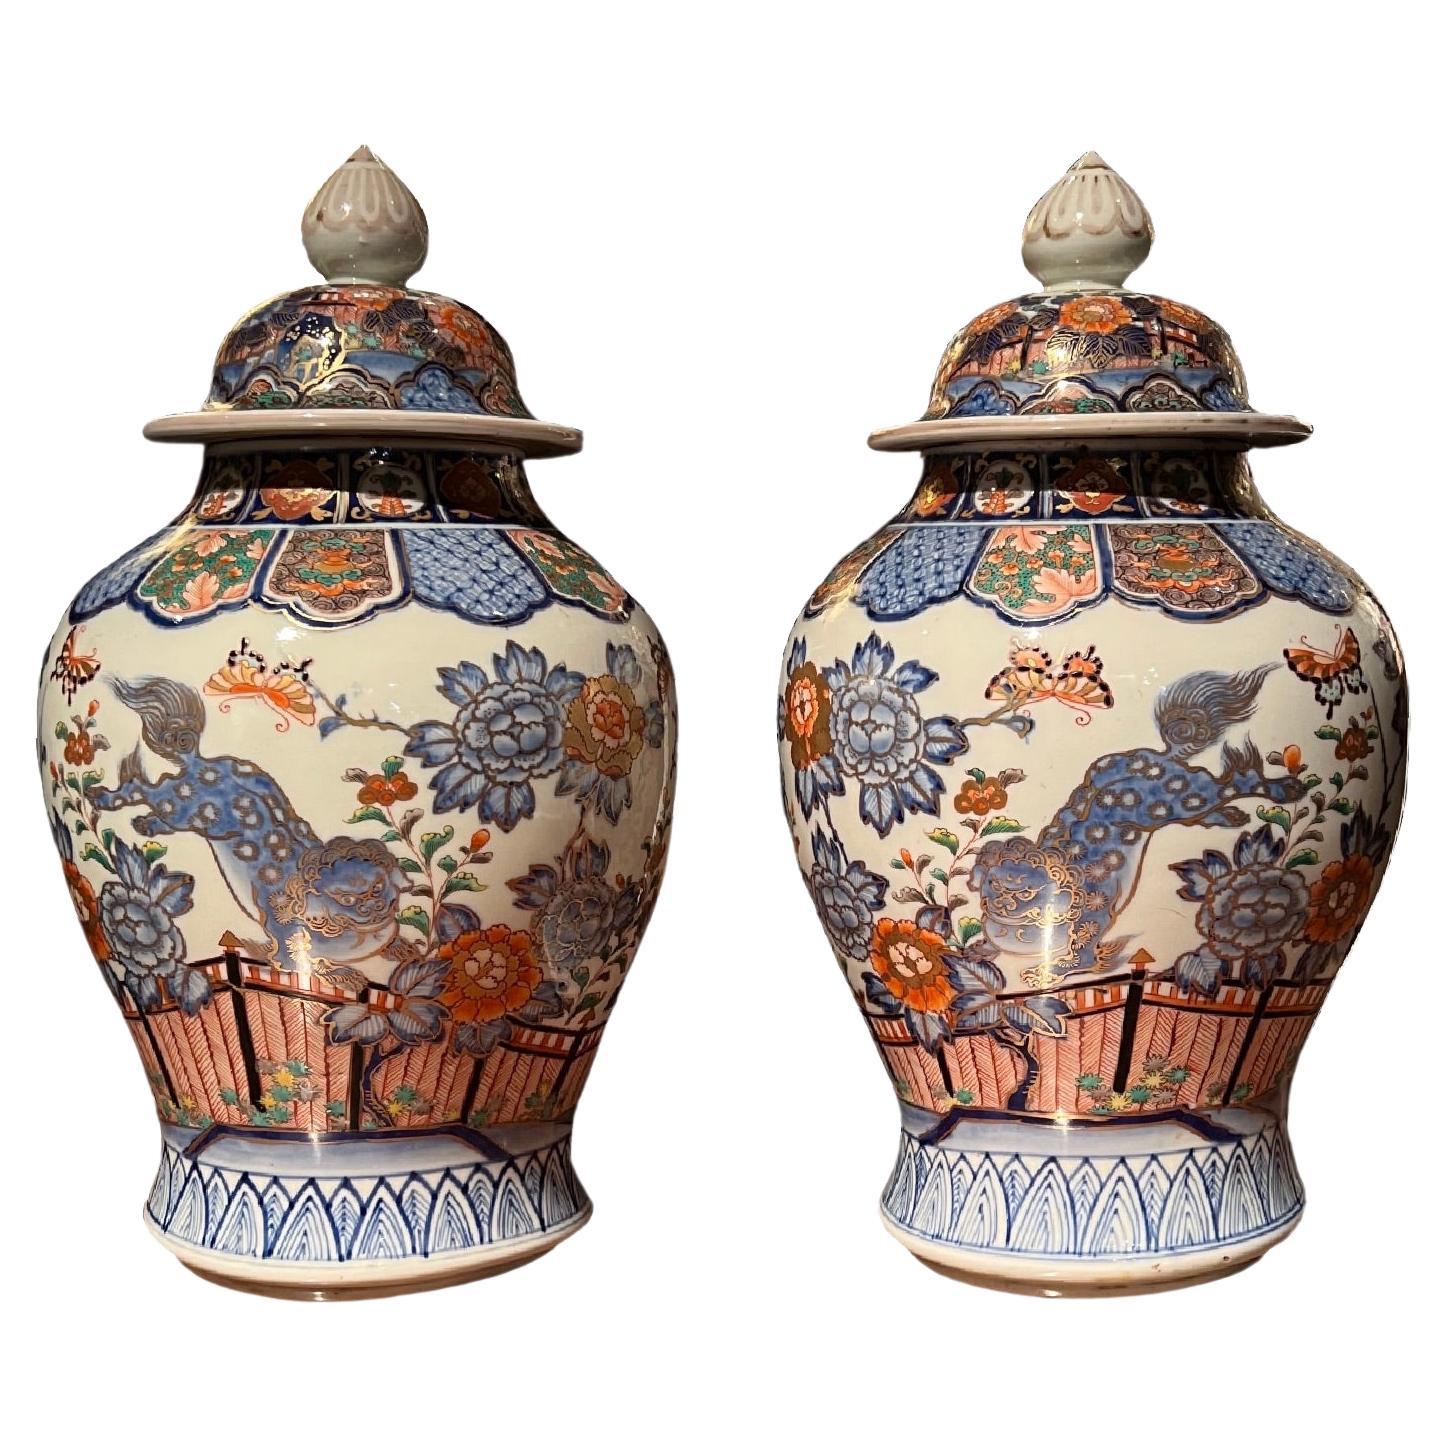  Pair of Japanese porcelain Vases, Arita Porcelain, Imari Decor, Japan, 19th c For Sale